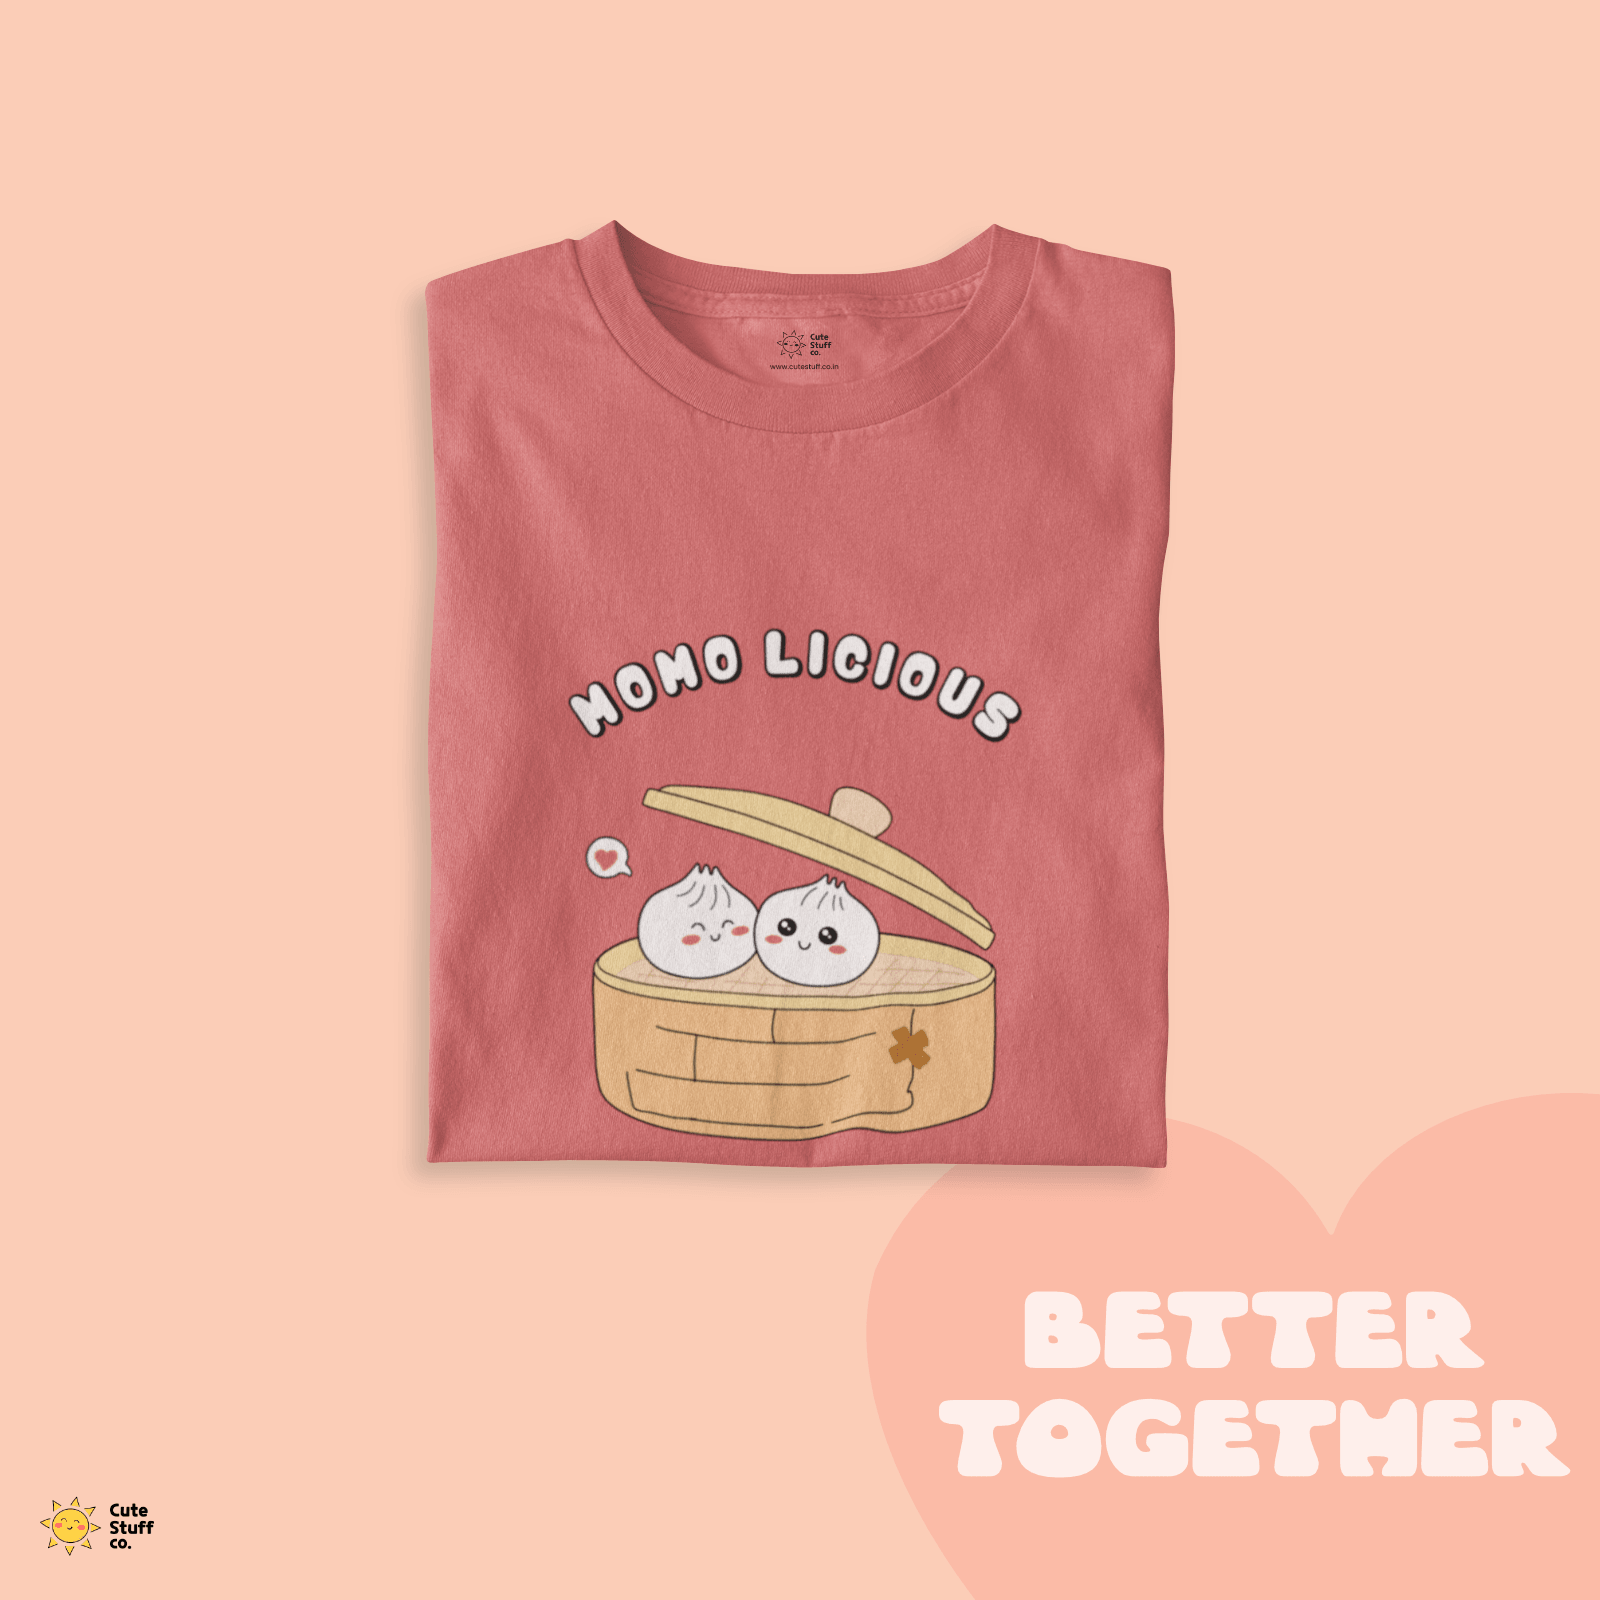 Momo licious Unisex Oversized T-shirts - Better Together - Cute Stuff India